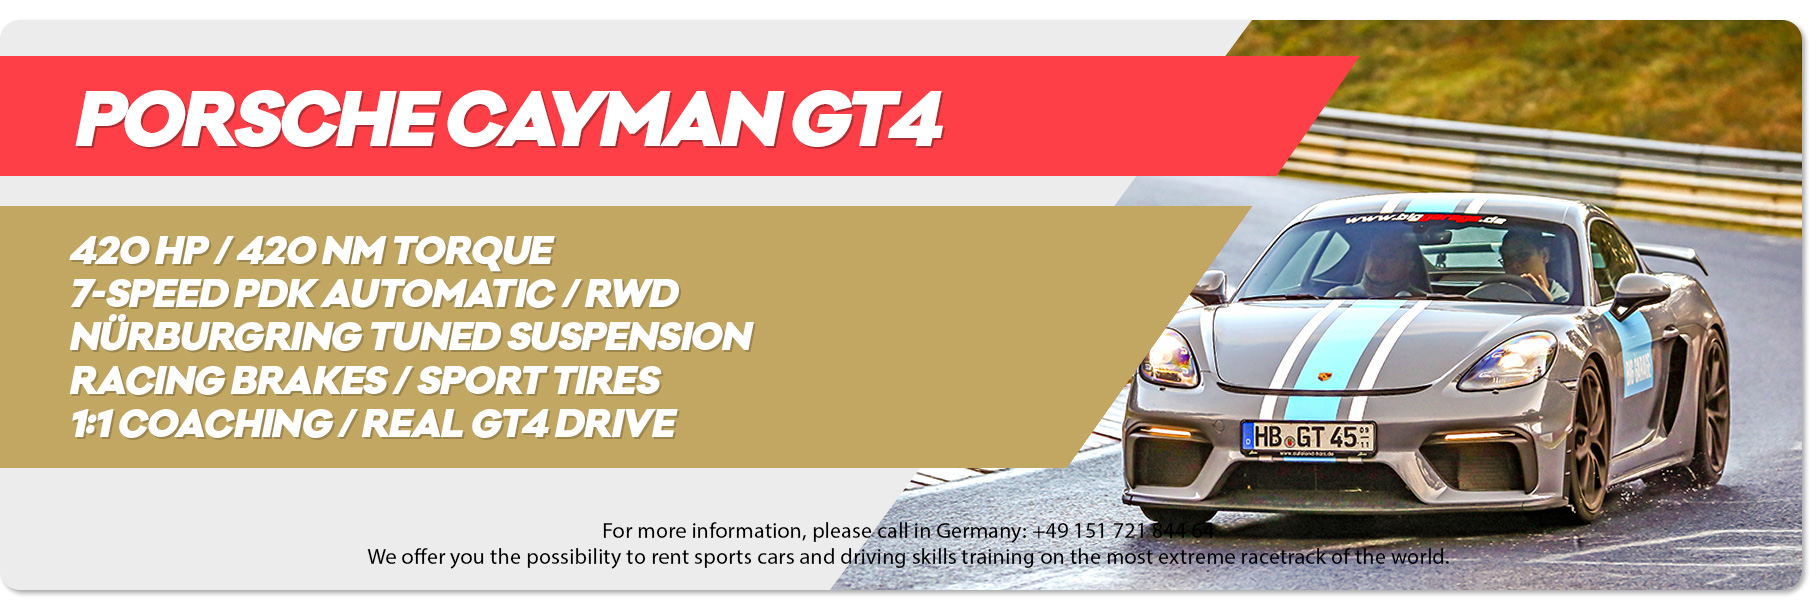 Booking and Drive new Porsche Cayman GT4